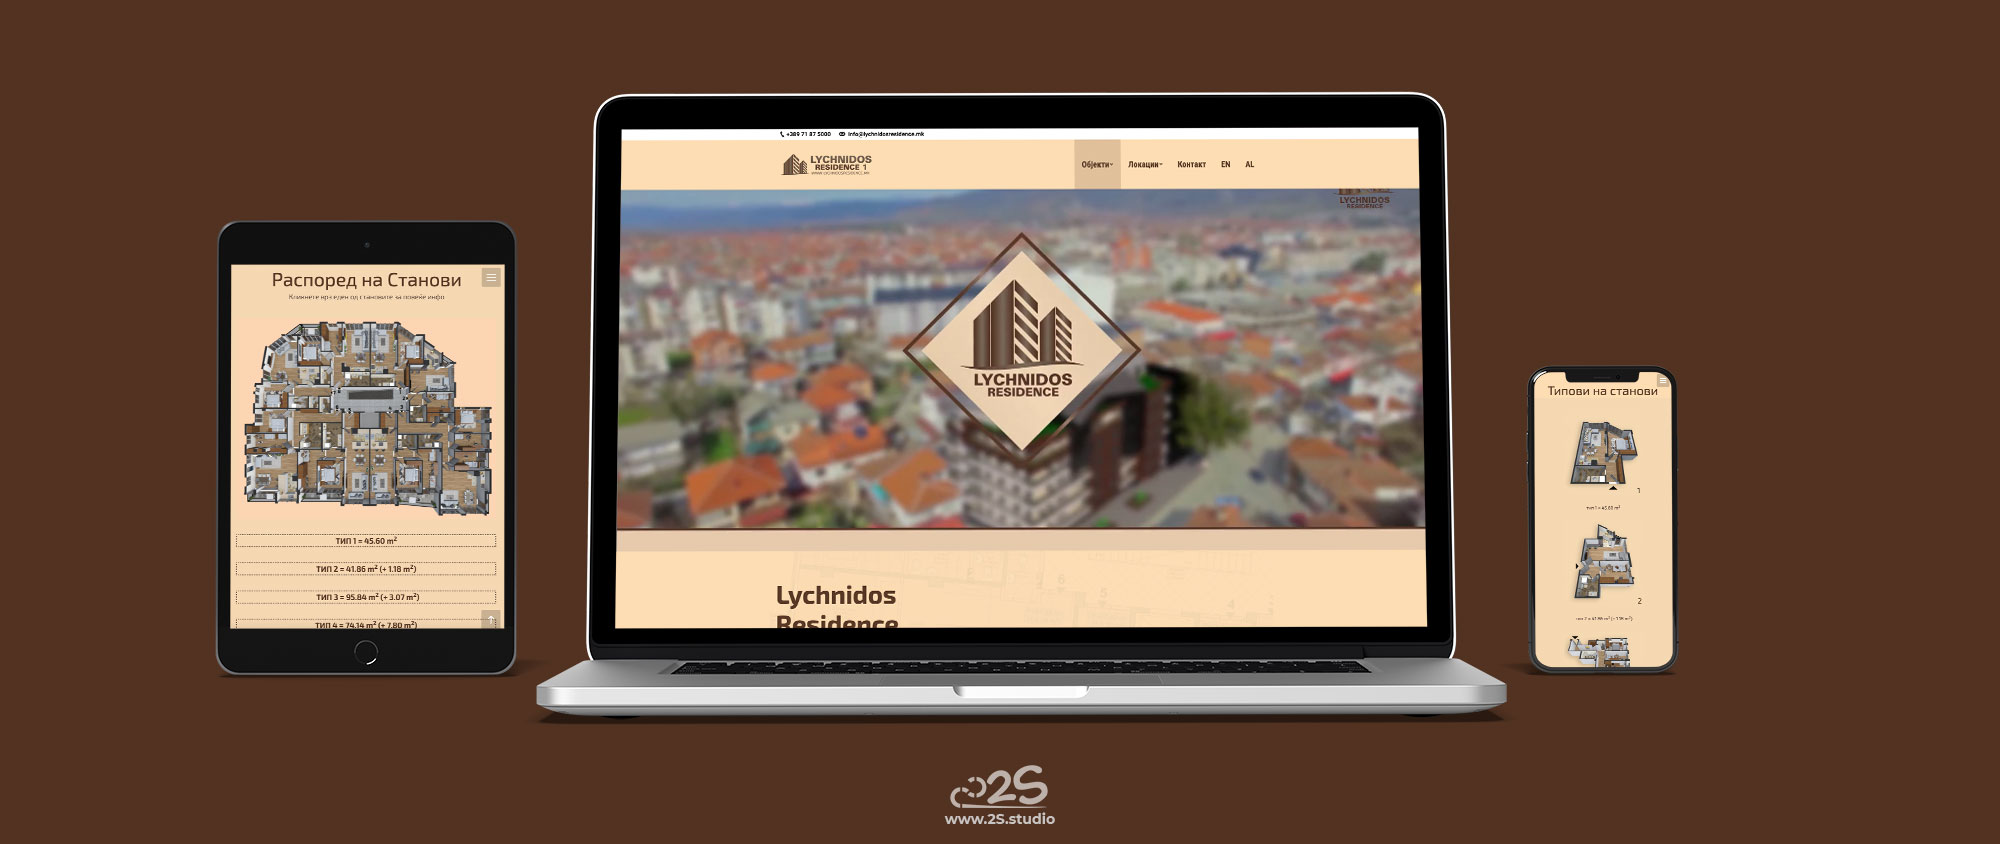 Lychnidos Residence – Web – 2019